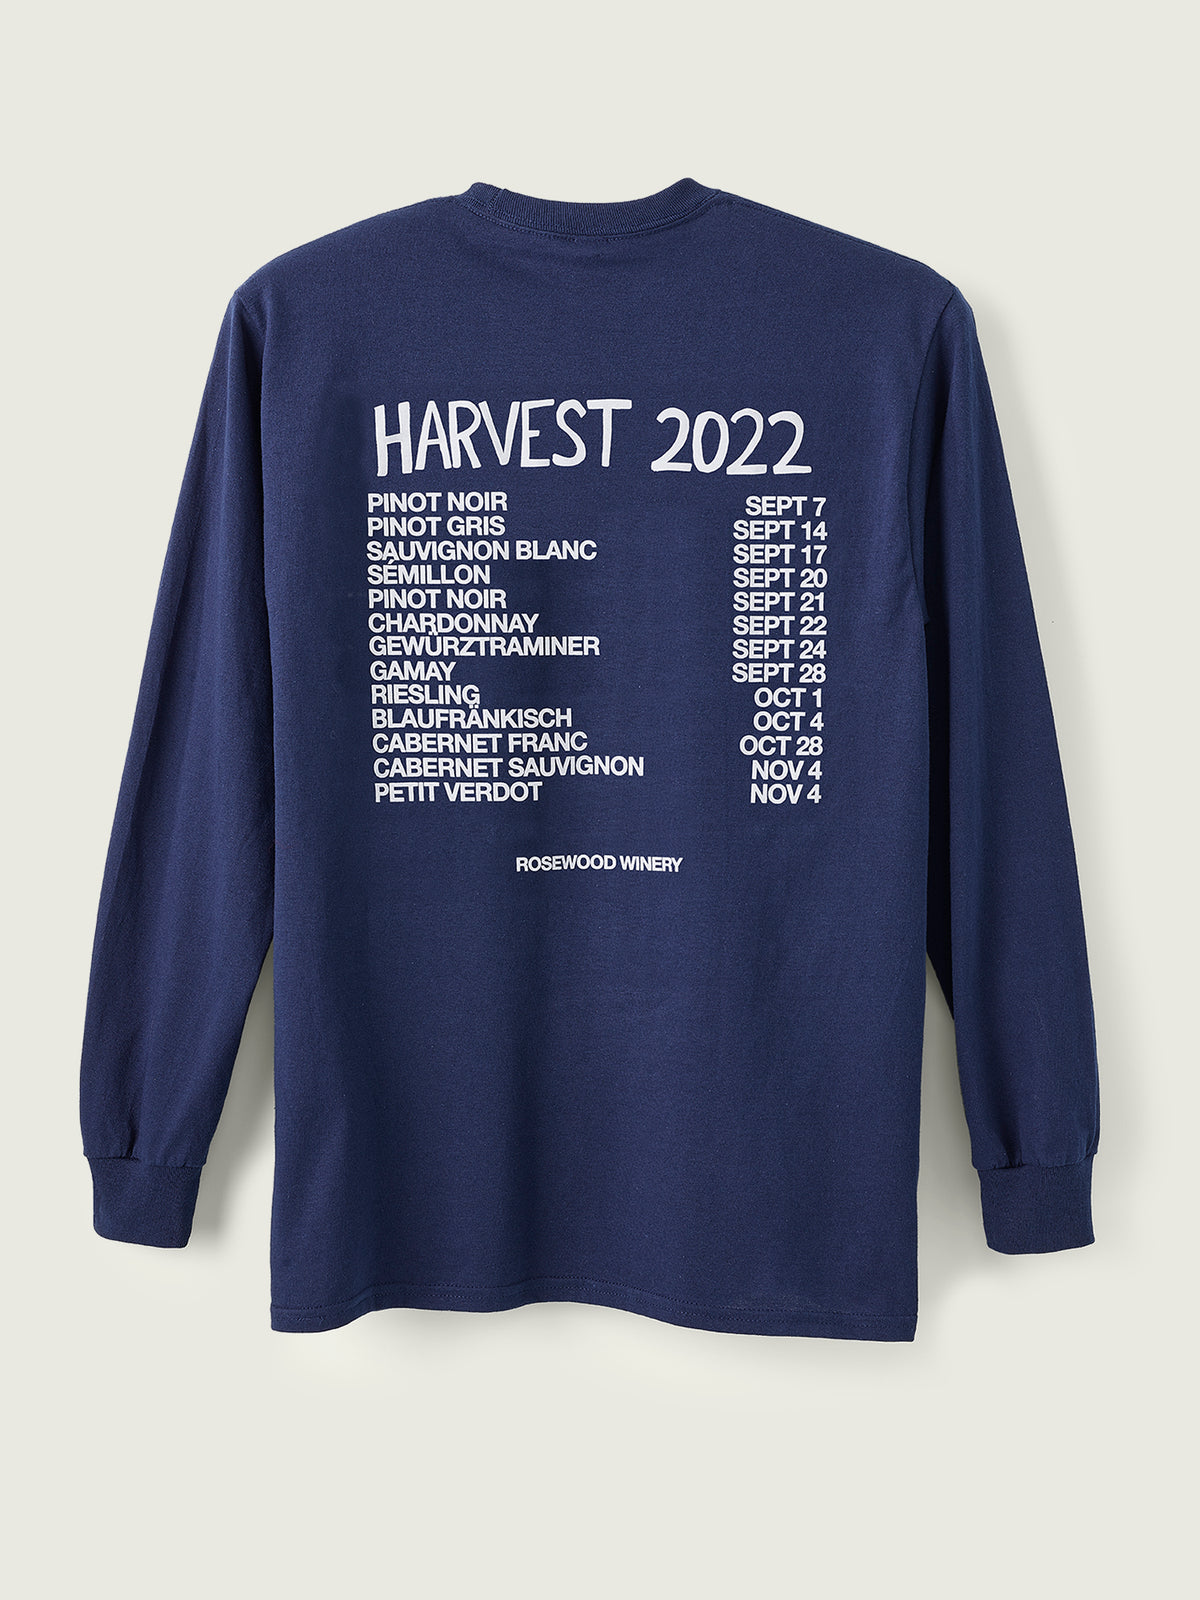 2022 Harvest Tour Shirt